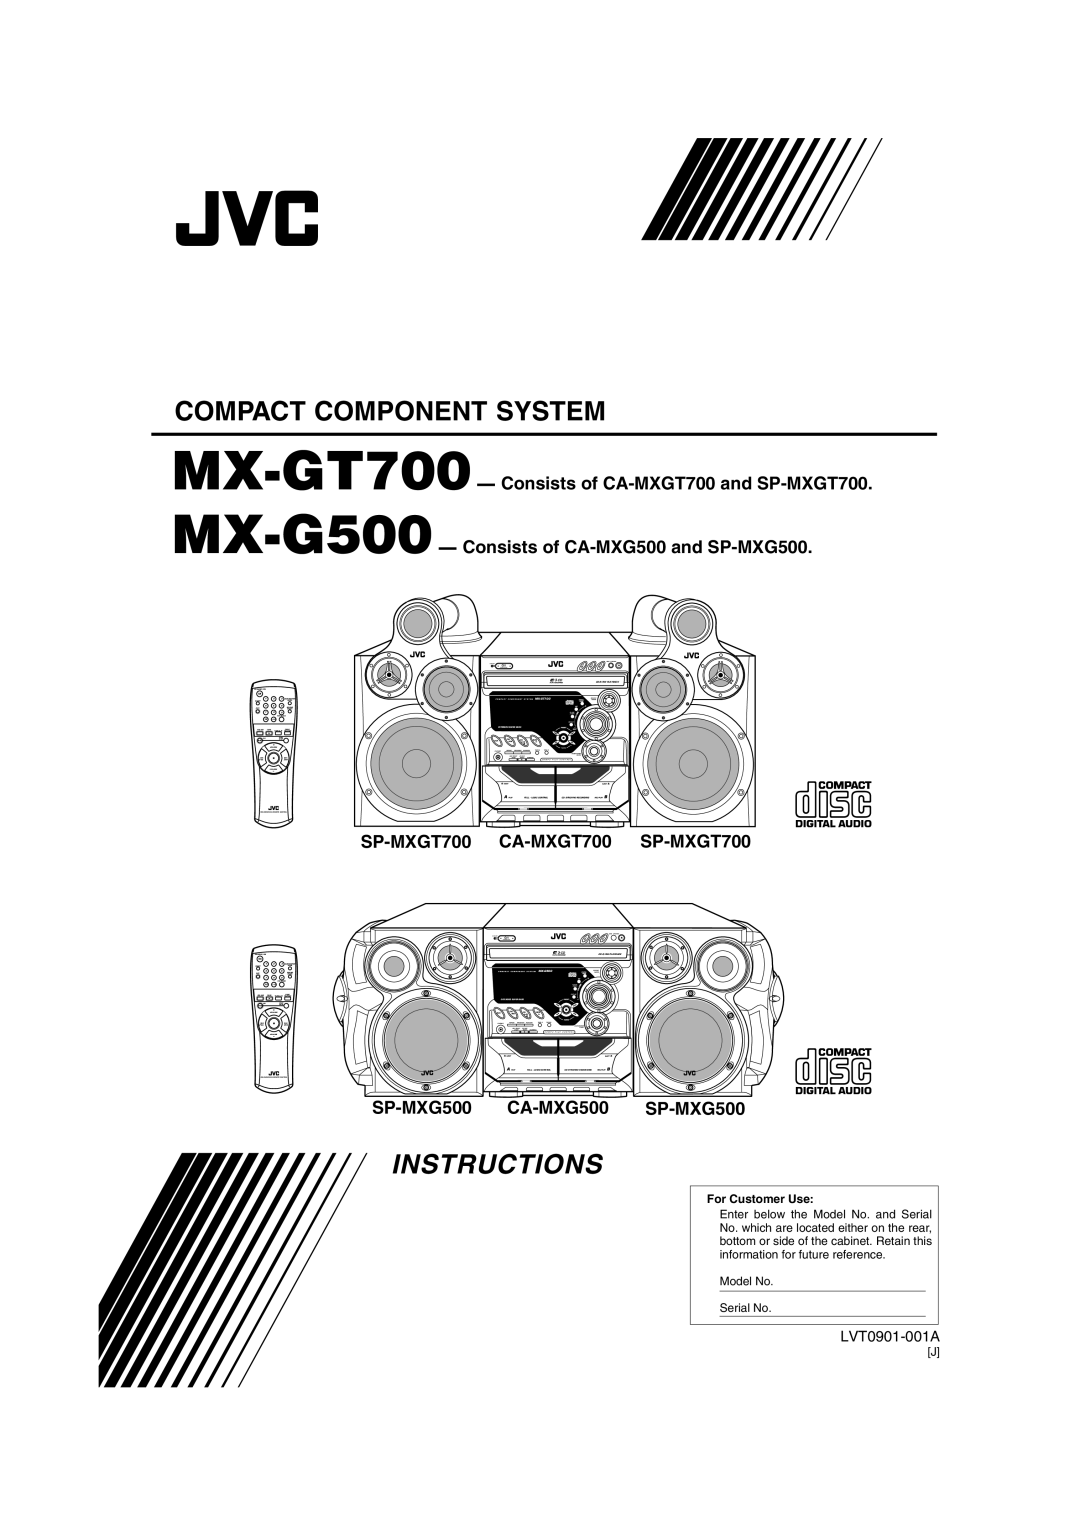 JVC MX-GT700 manual Compact Component System, Instructions, SP-MXGT700, CA-MXGT700, SP-MXG500 CA-MXG500 SP-MXG500, 3 CD 